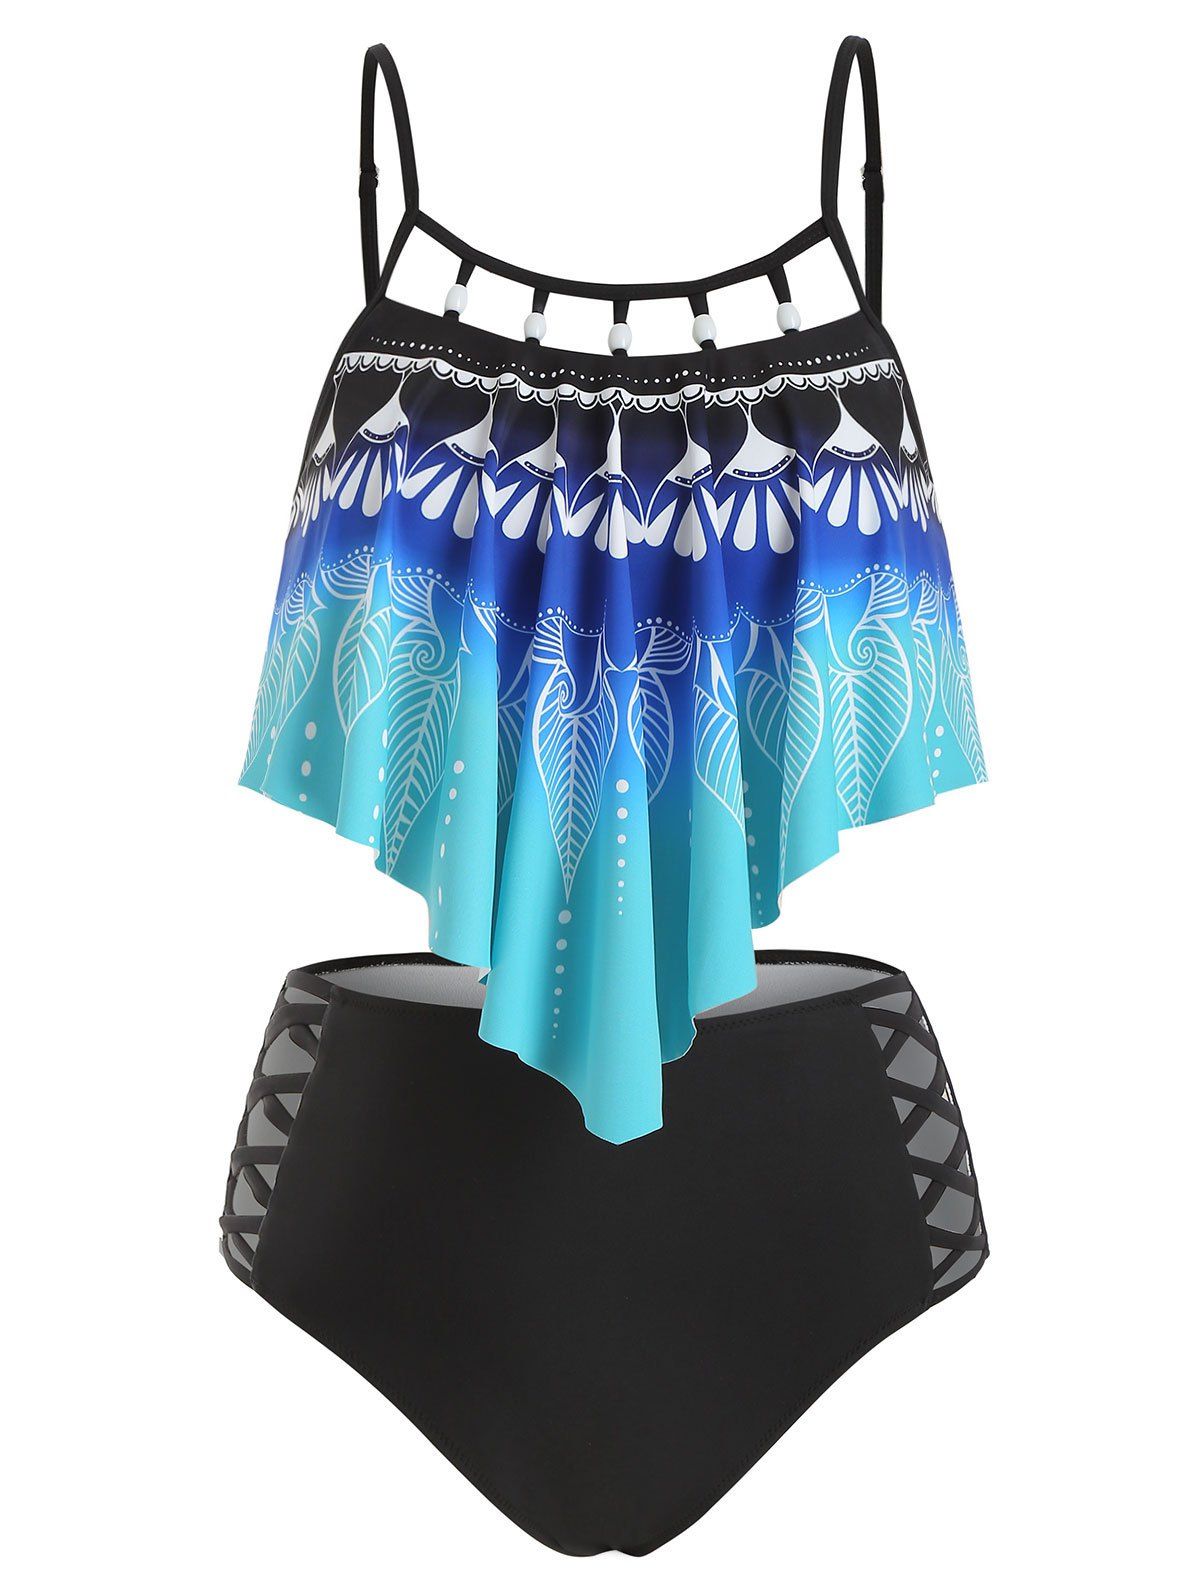 Leaf Print Beading Embellished Criss Criss Tankini Swimsuit - multicolor 3XL